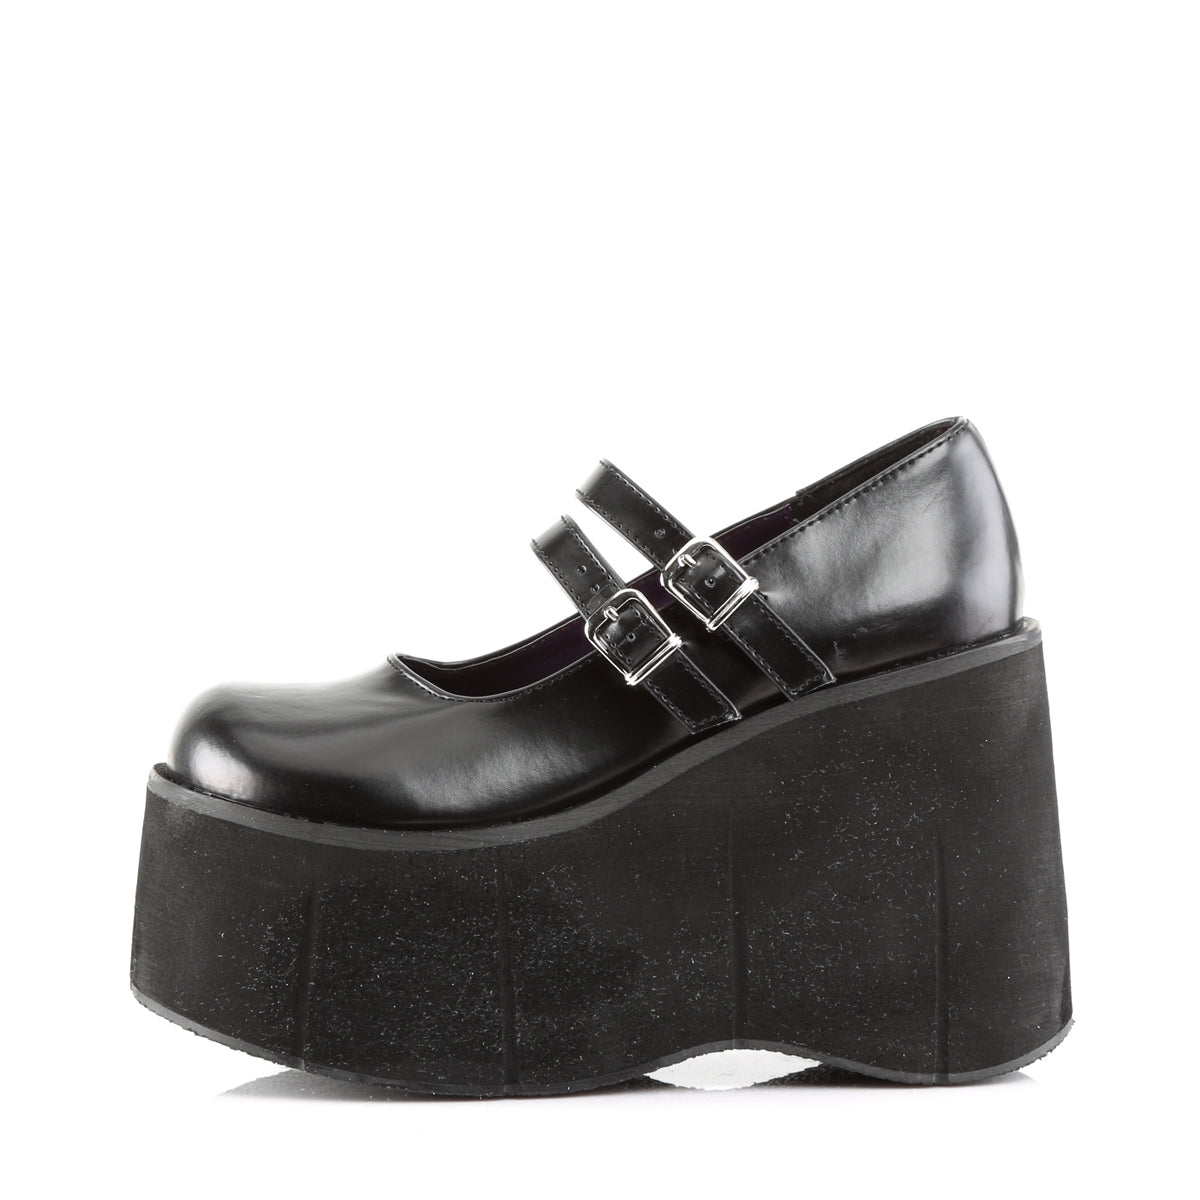 Mary Jane Style Black PU Platform Shoes